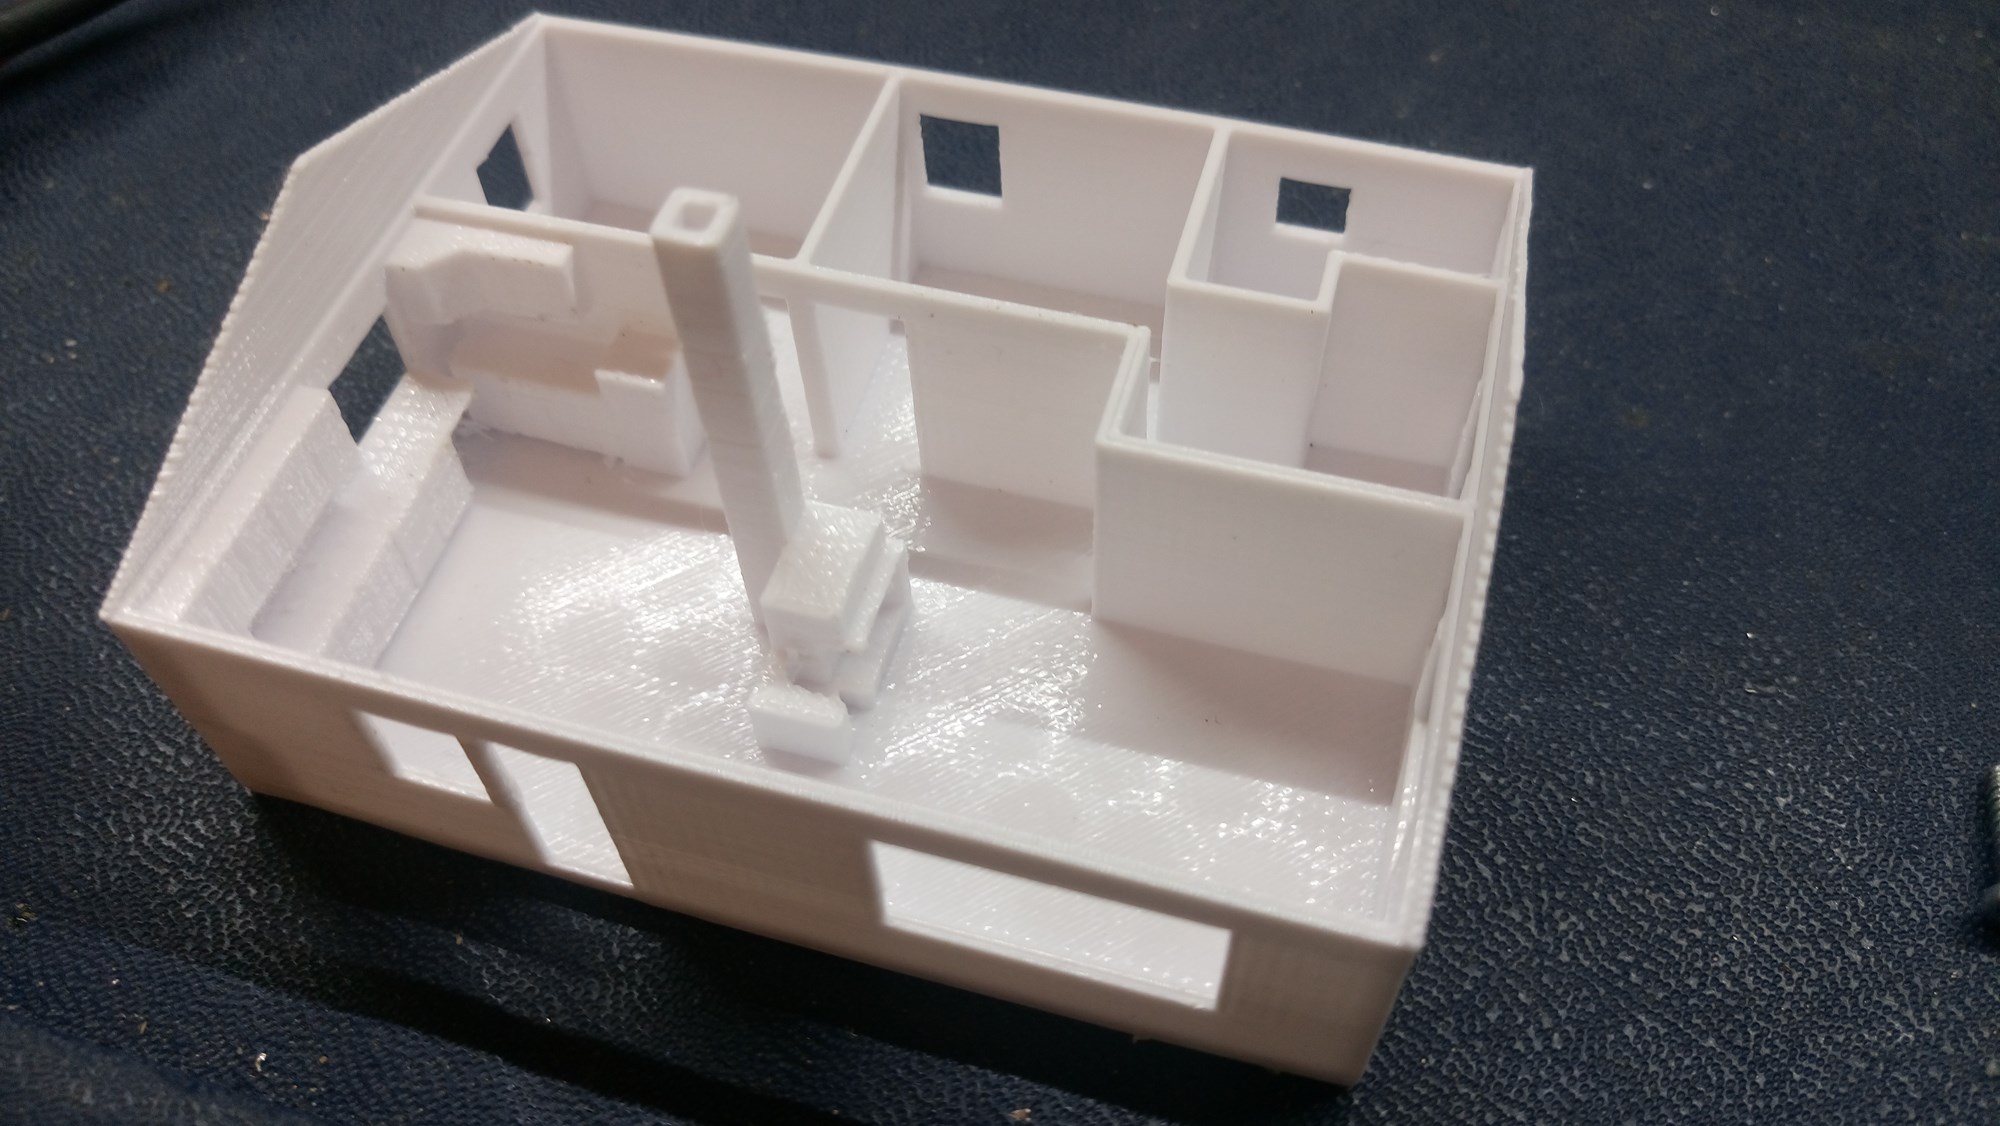 Tråd om 3D-printing - DSC_0076.JPG - Einar_S